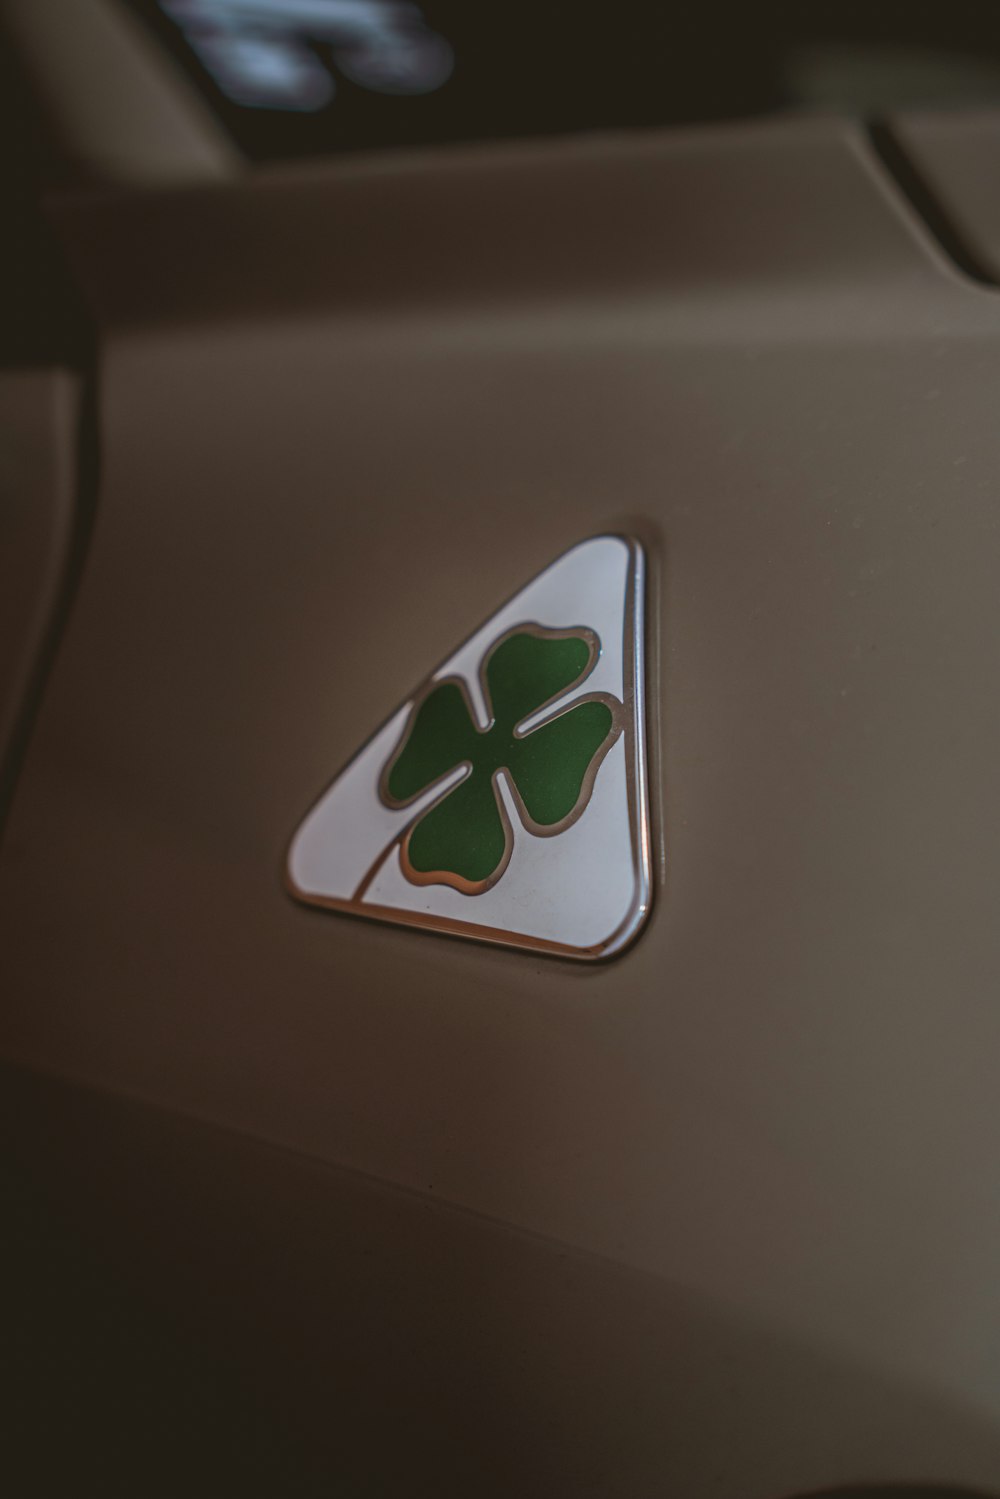 white and green star sticker